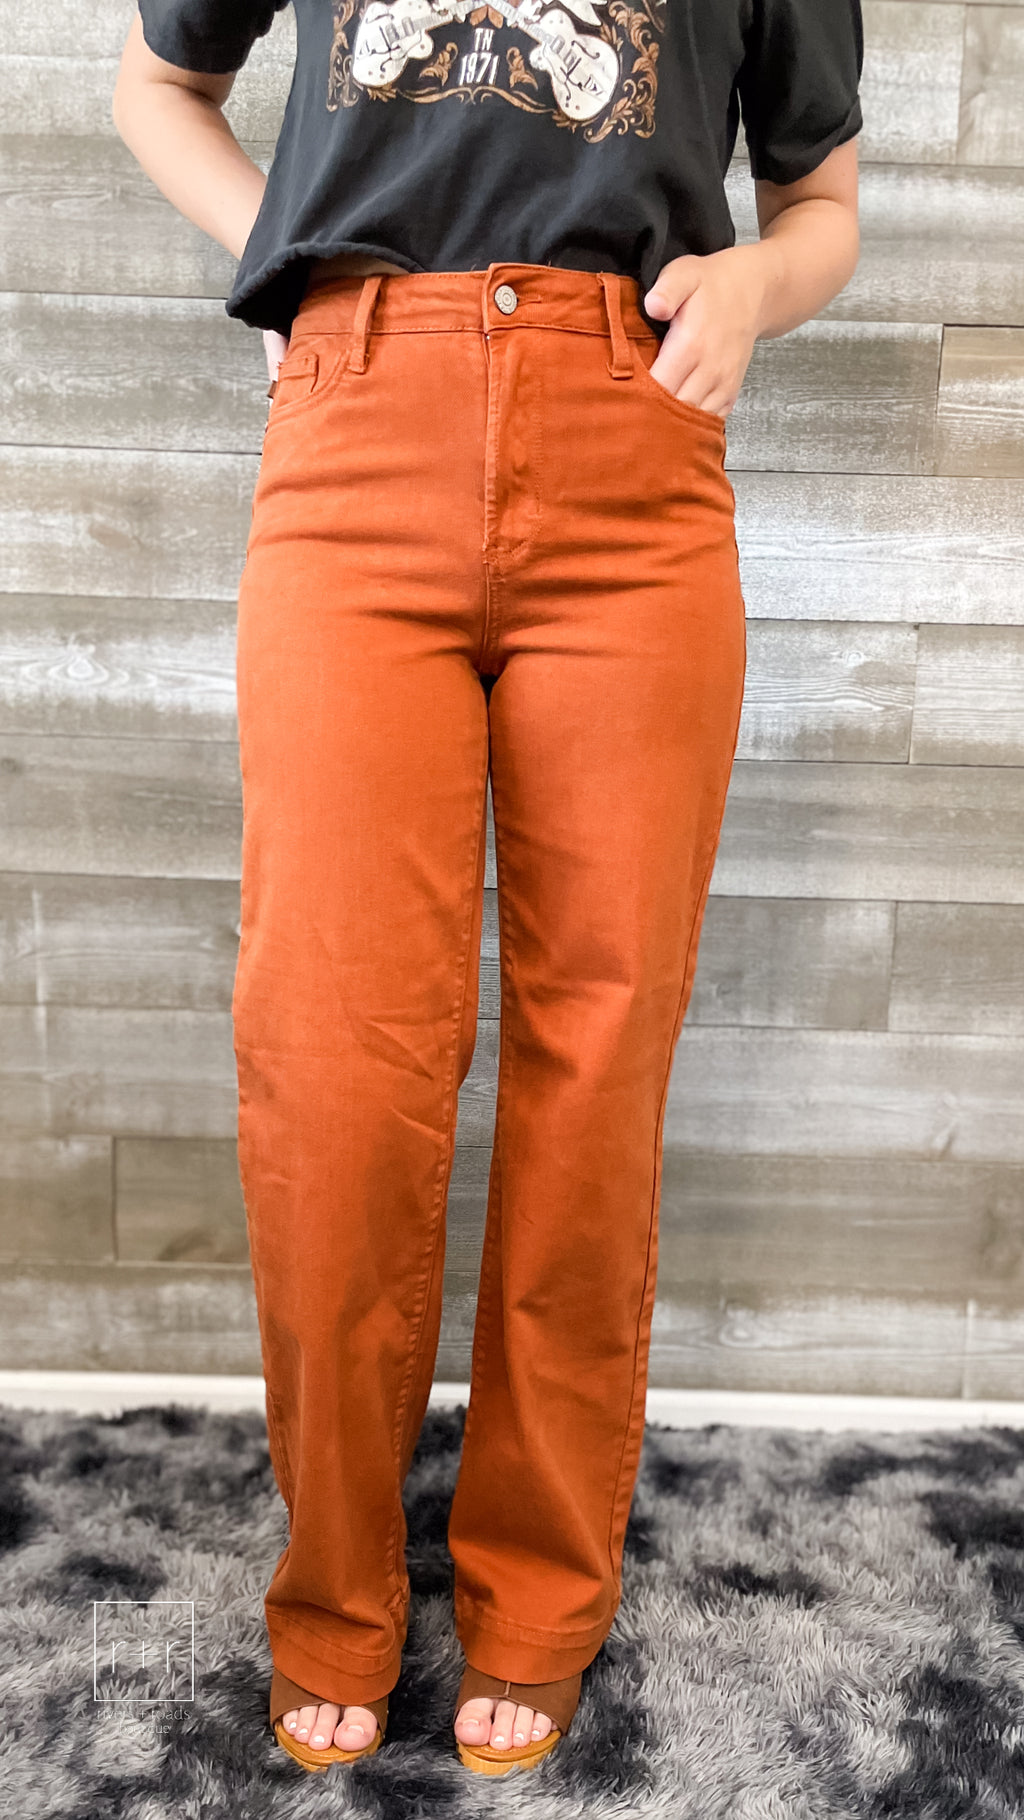 judy blue high waist garment dyed wide leg jeans auburn orange JB88498